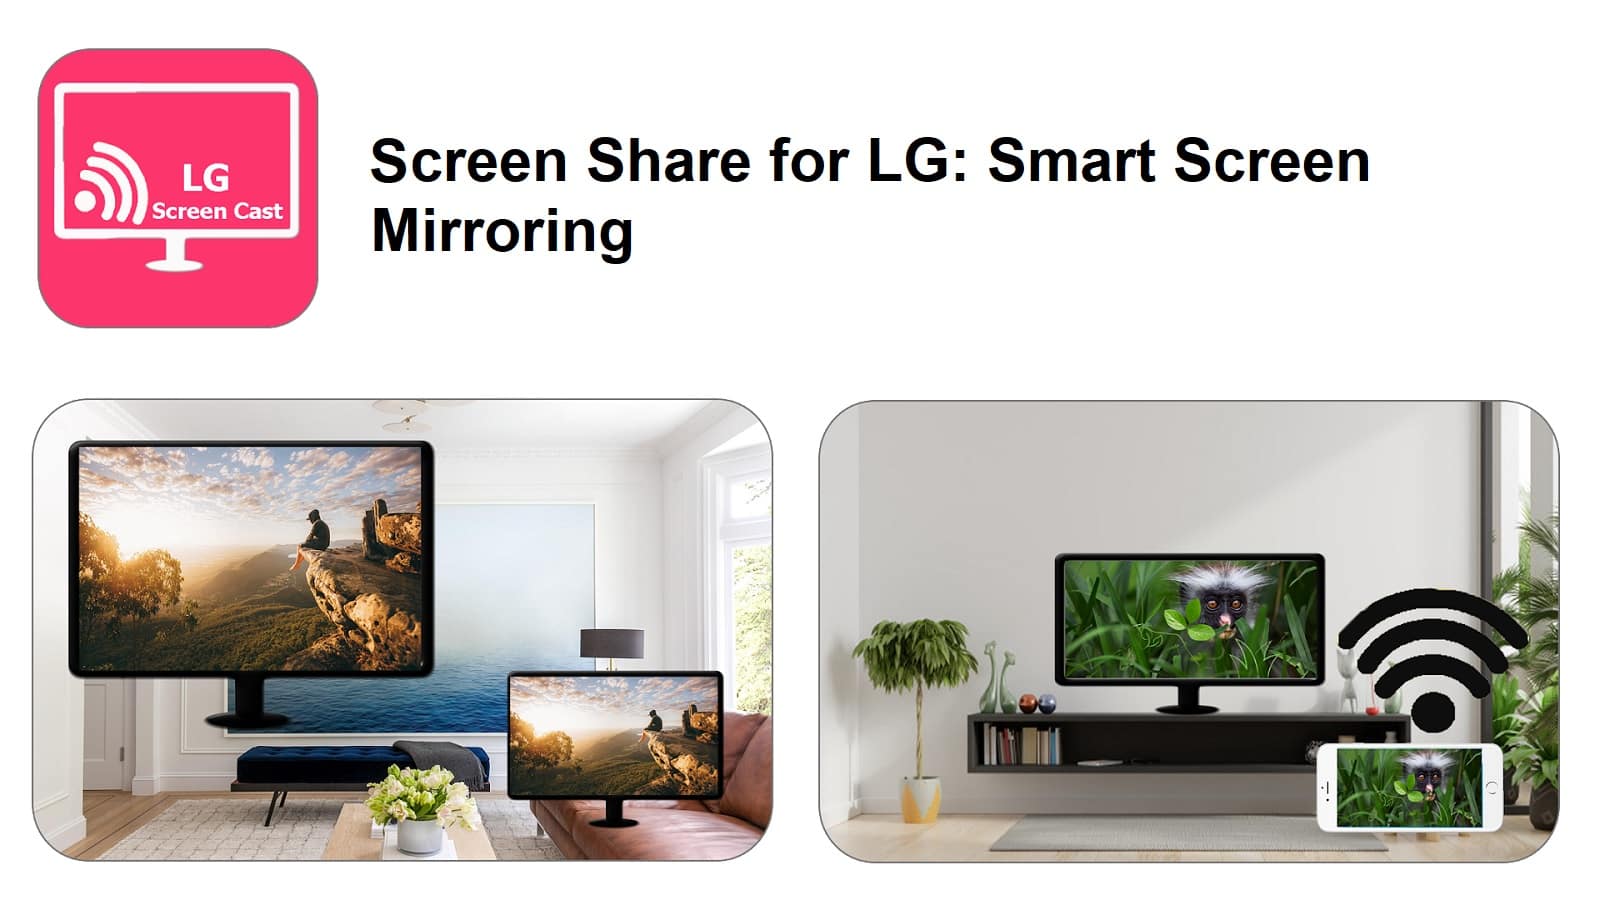 Tv cast lg. Screen share LG. Mirror LG TV. LG Screens. WIFI Screen share LG.